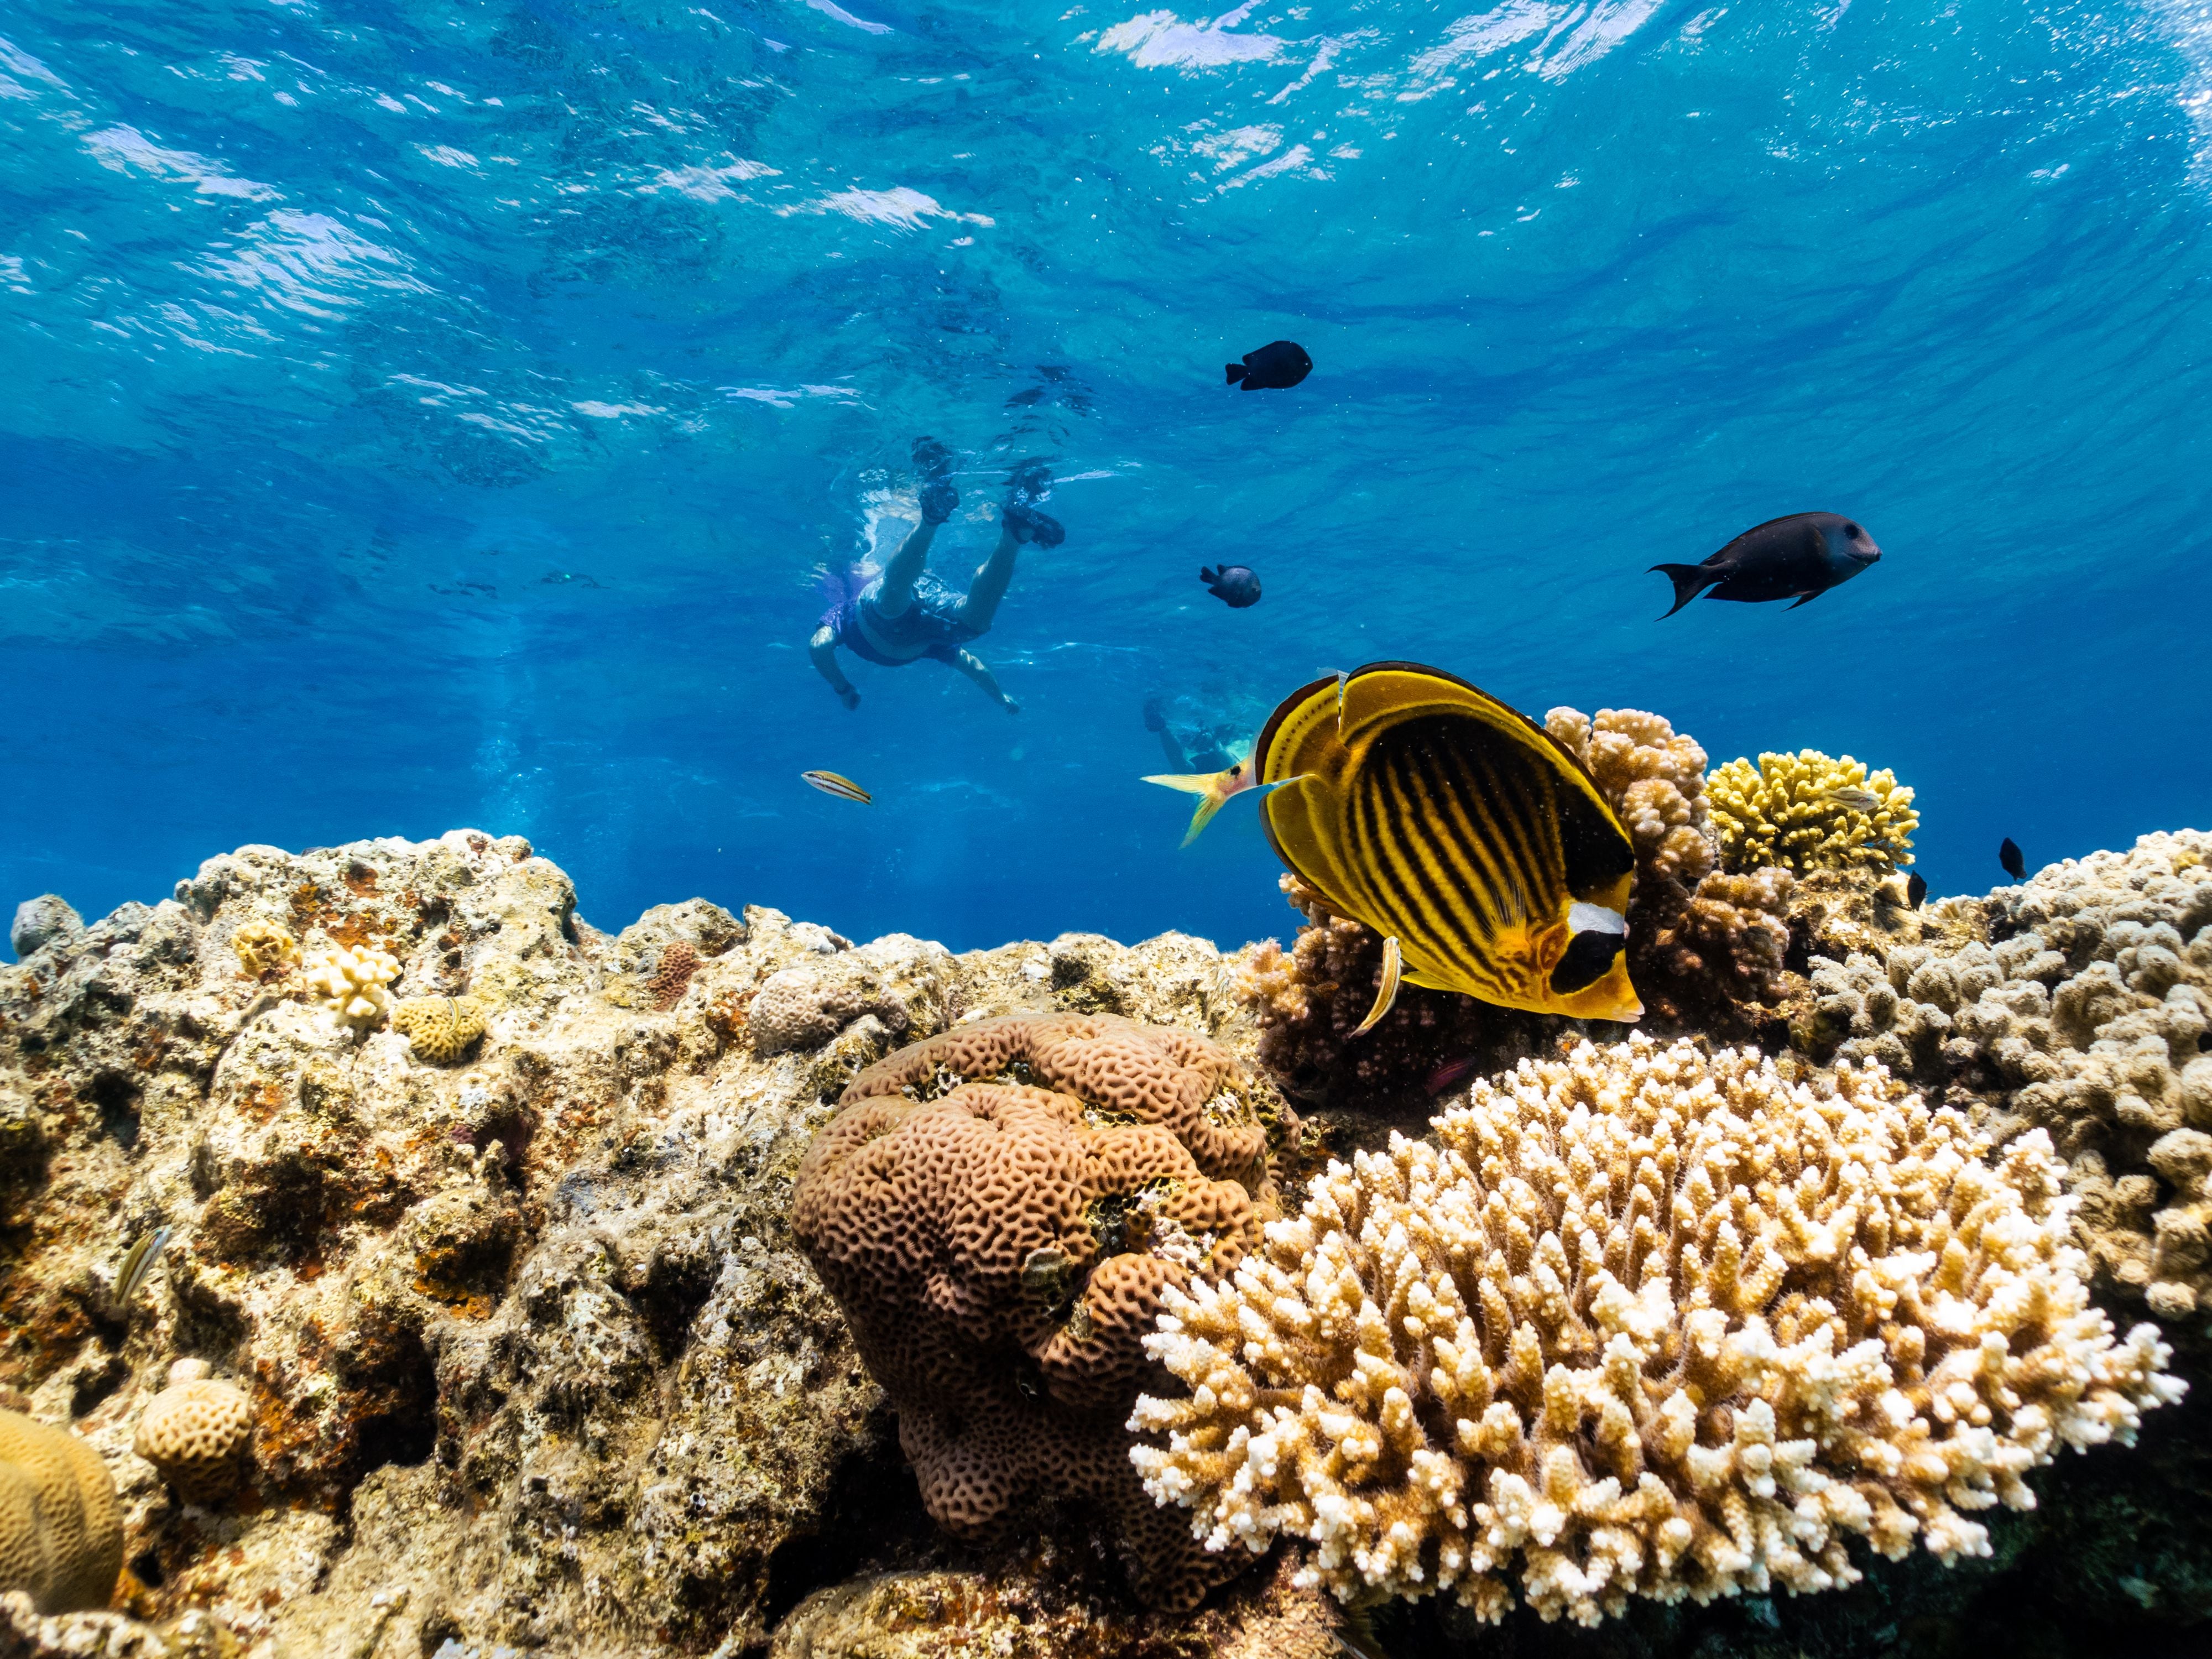 Red Sea 'super corals' resistant to rising ocean temperatures - in pictures